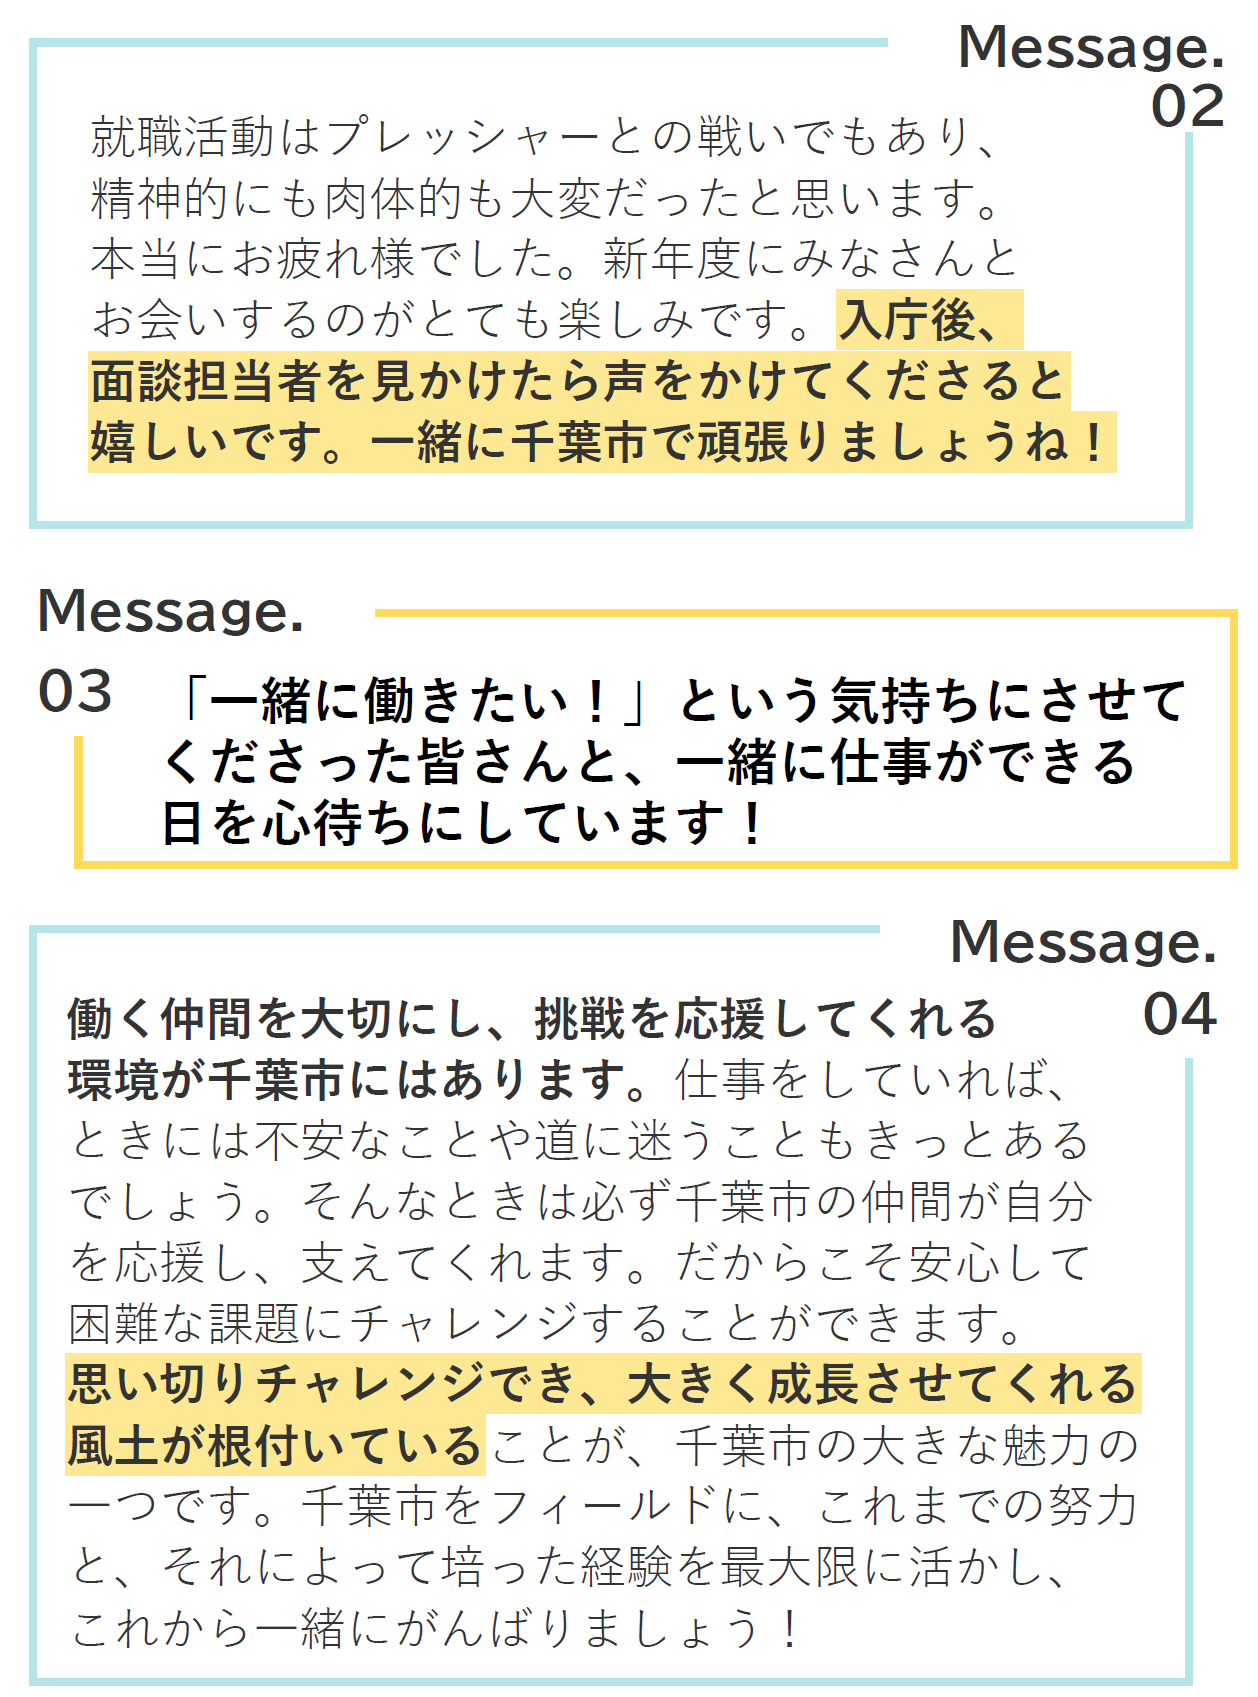 message-02